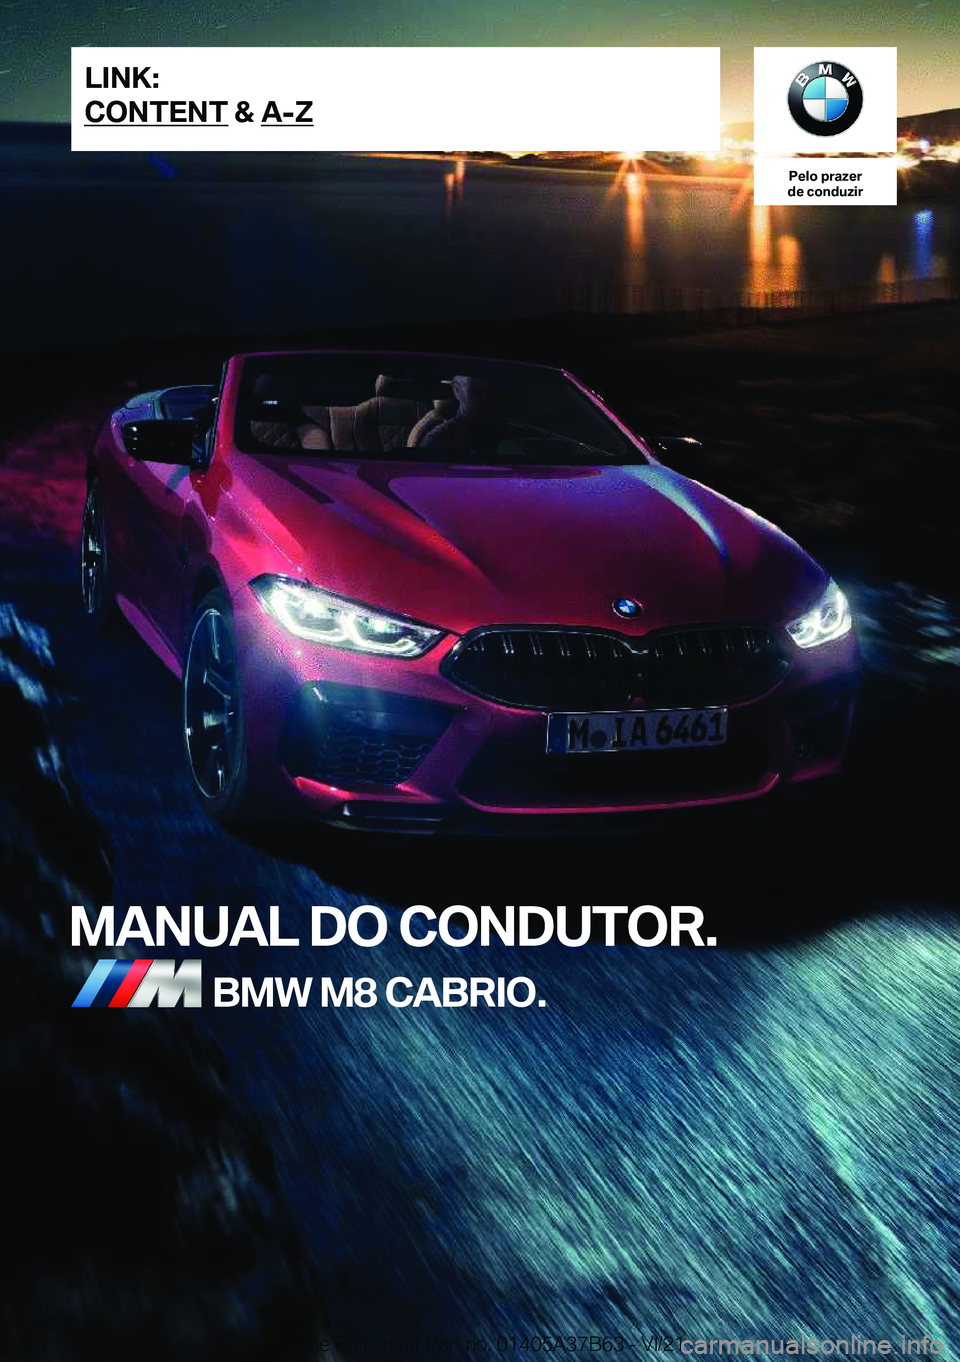 BMW M8 2022  Manual do condutor (in Portuguese) �P�e�l�o��p�r�a�z�e�r
�d�e��c�o�n�d�u�z�i�r
�M�A�N�U�A�L��D�O��C�O�N�D�U�T�O�R�.�B�M�W��M�8��C�A�B�R�I�O�.�L�I�N�K�:
�C�O�N�T�E�N�T��&��A�-�Z�O�n�l�i�n�e��E�d�i�t�i�o�n��f�o�r��P�a�r�t��n�